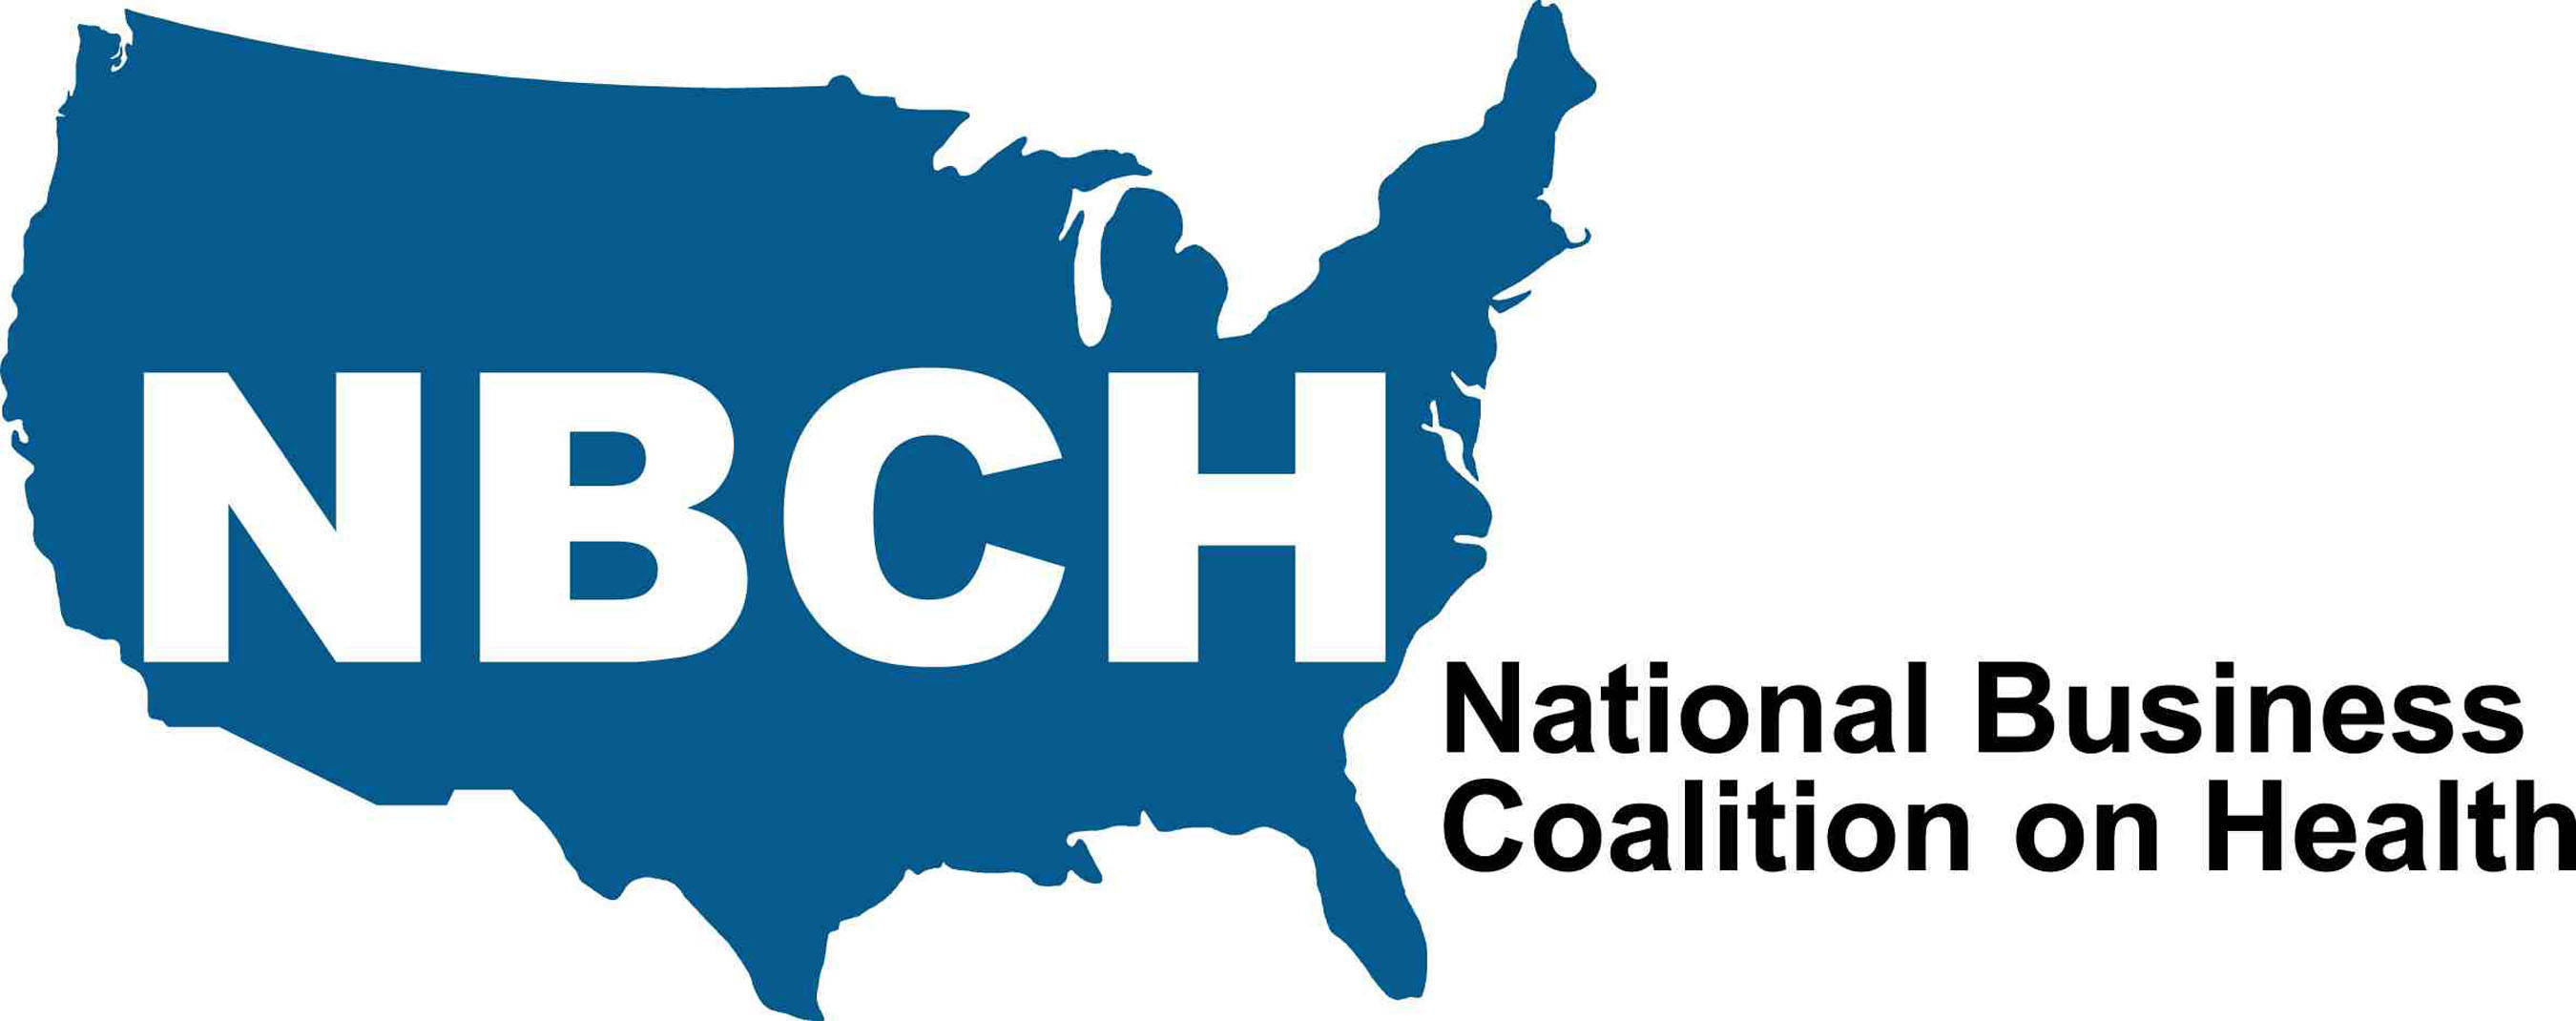 National Business Coalition on Health Logo.